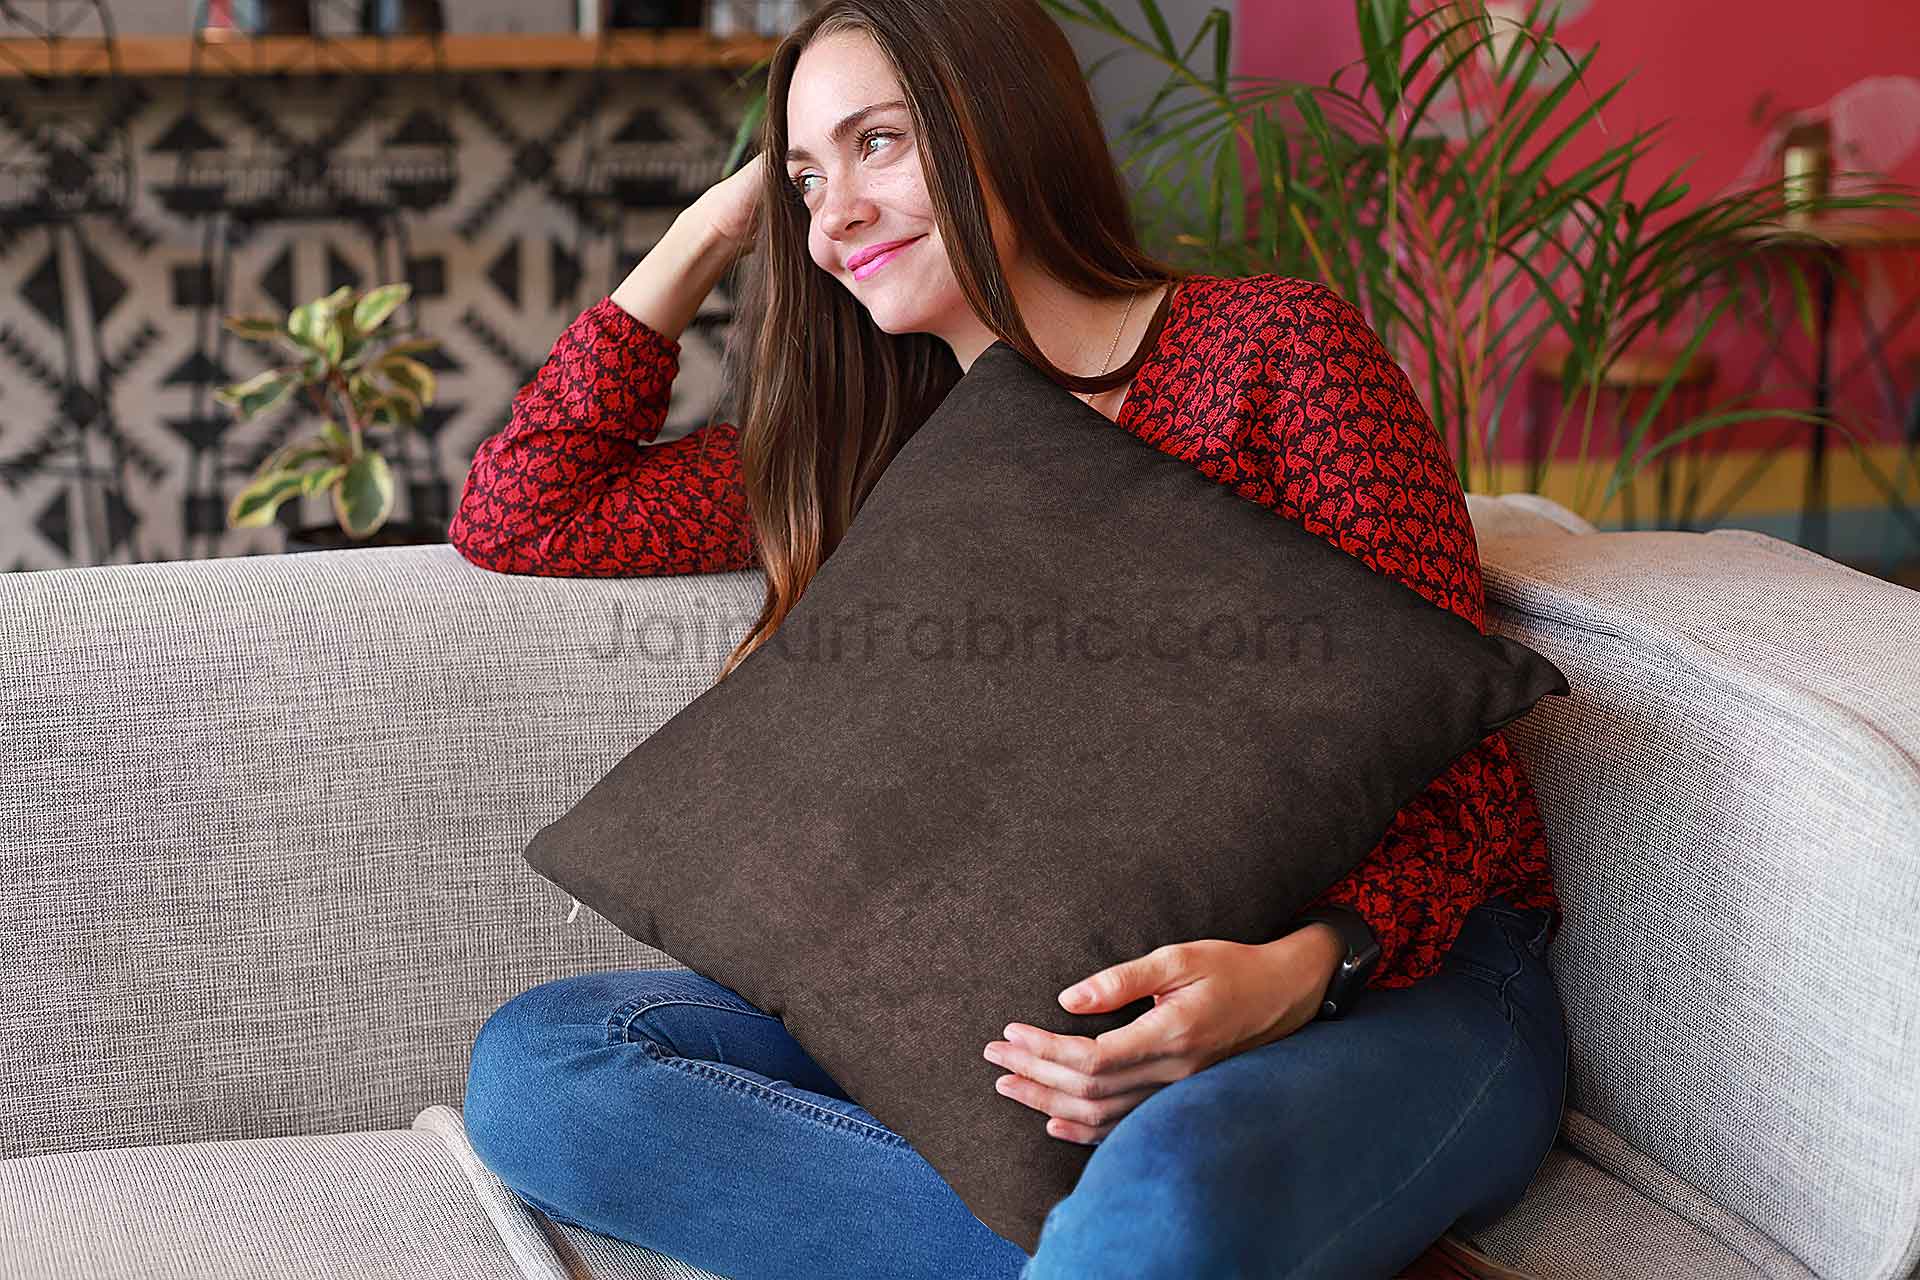 Brown Decorative Super Soft Velvet Cushion Cover